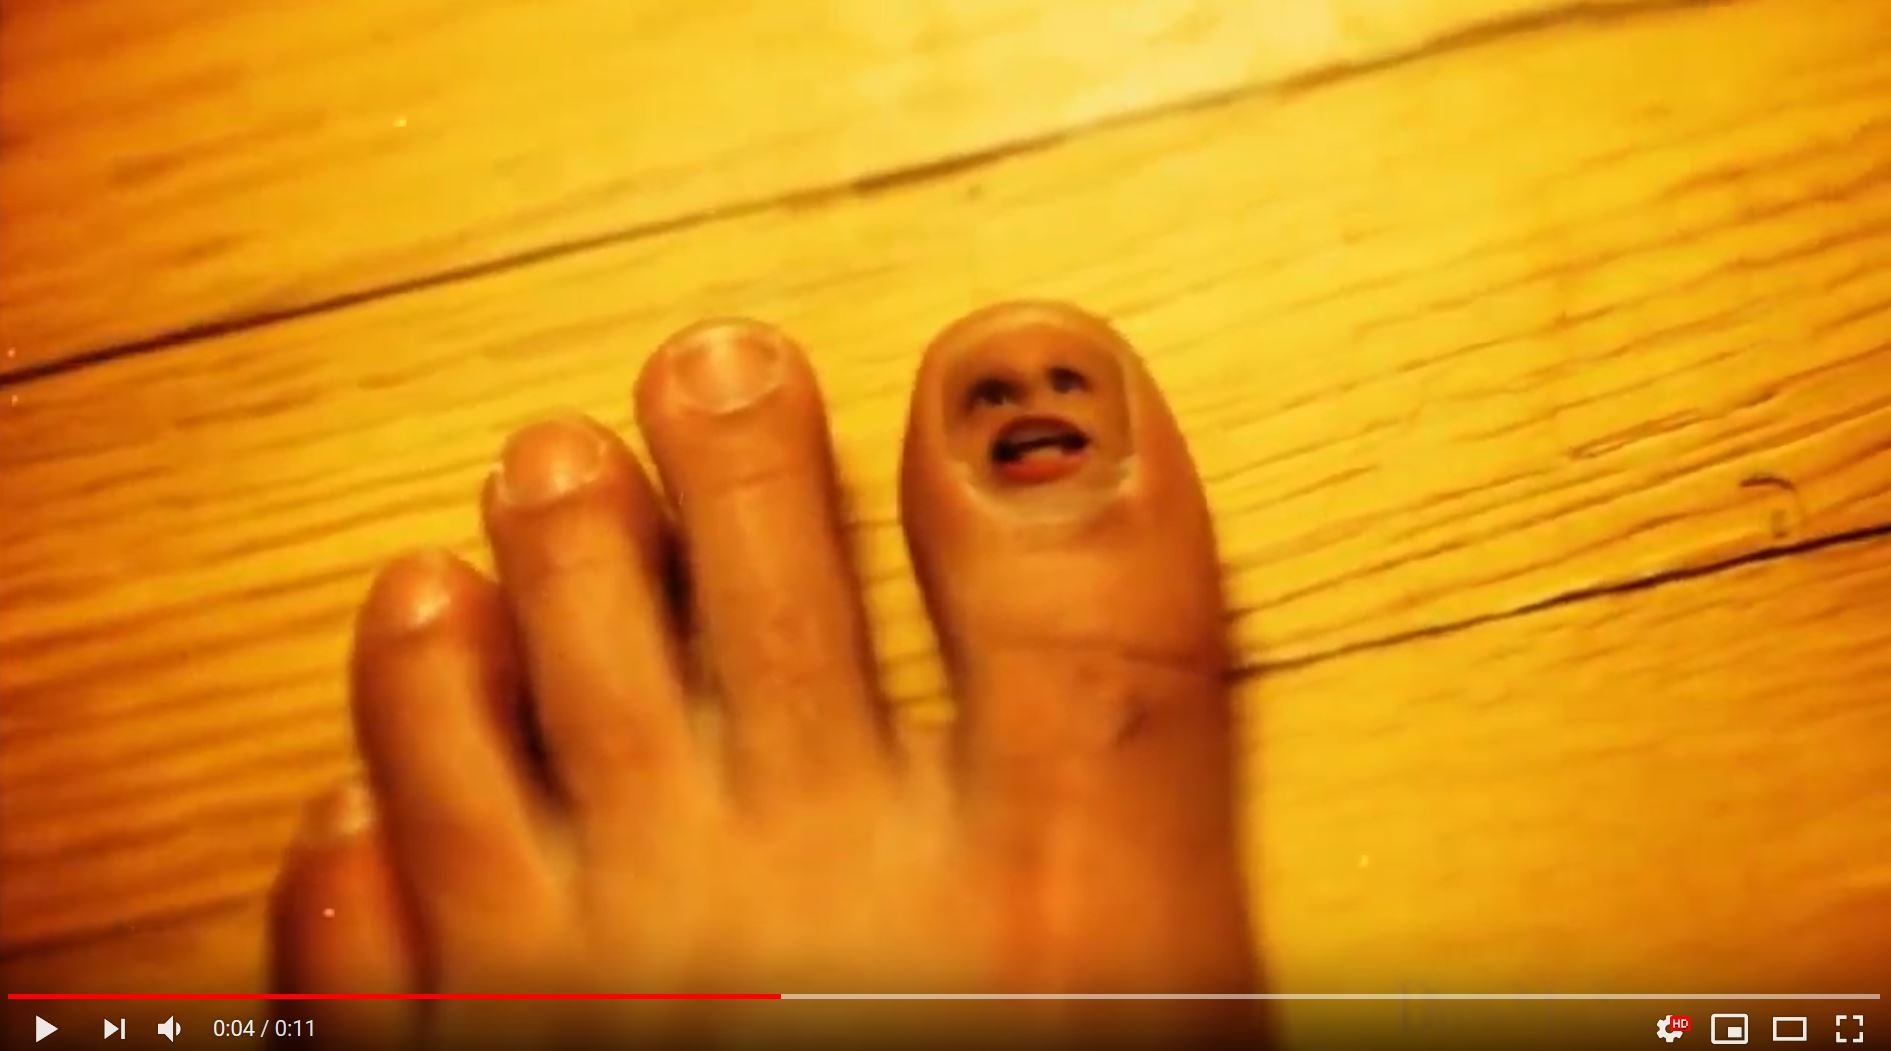 My living toe